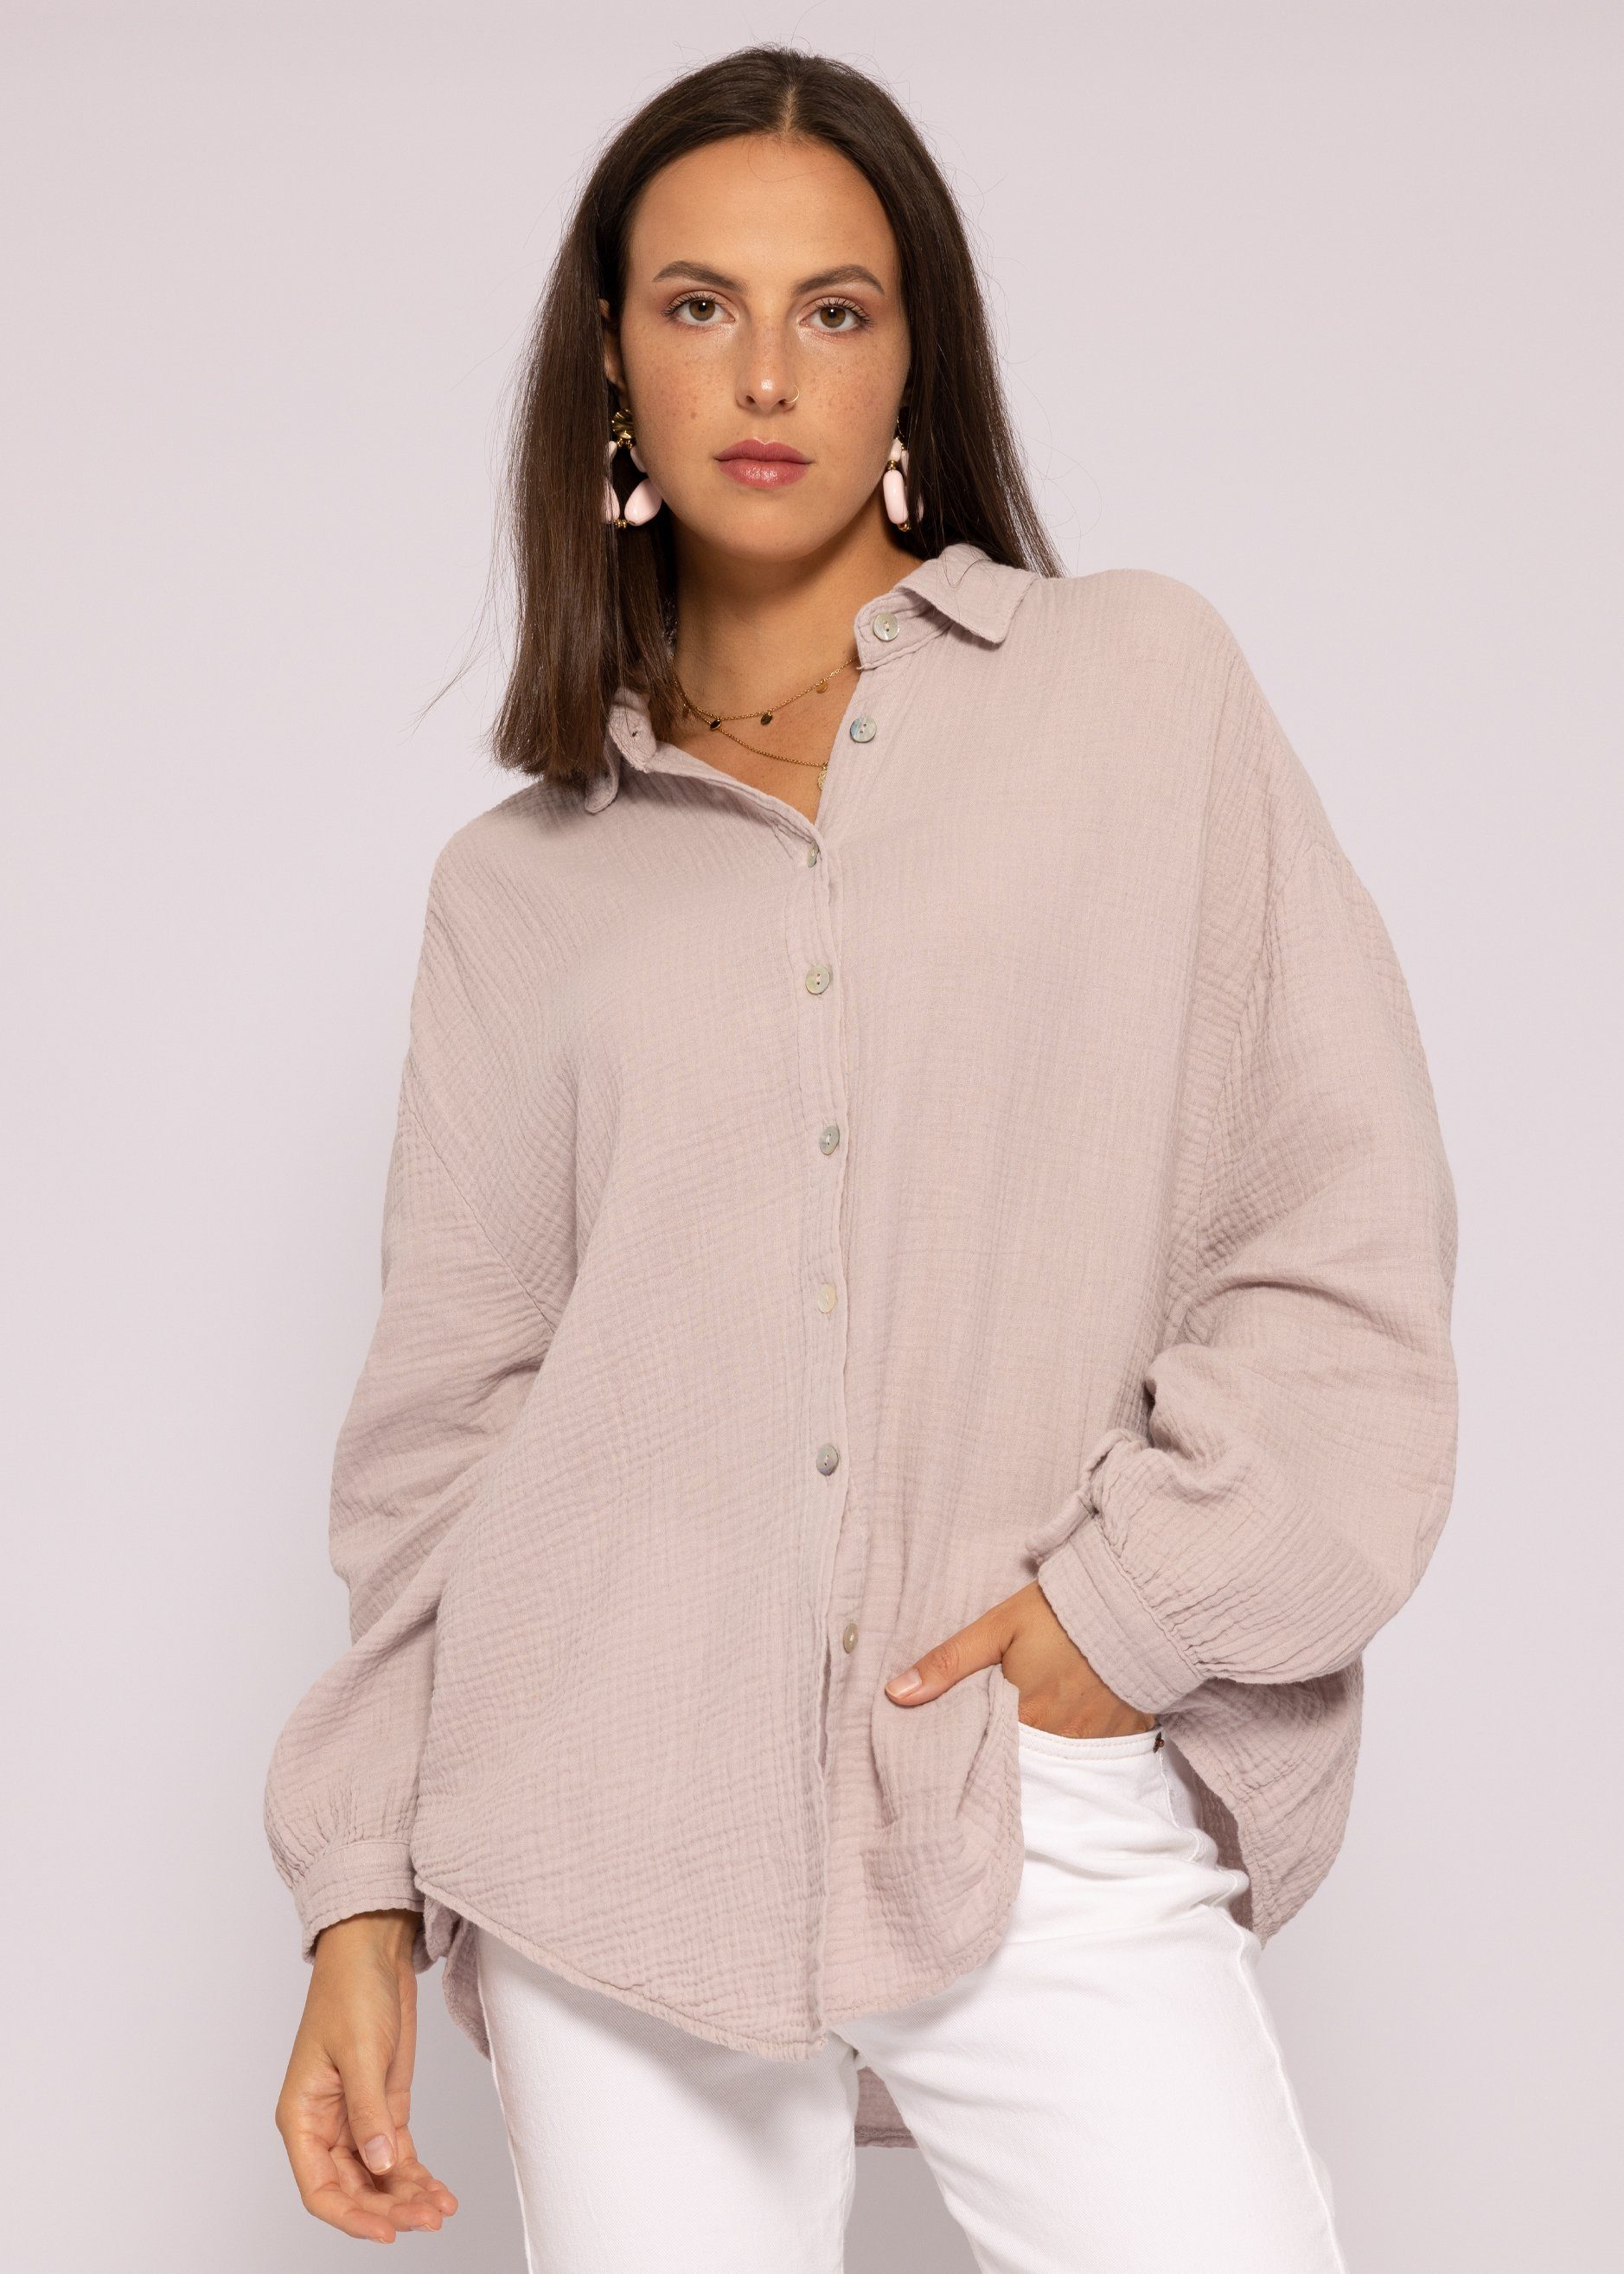 SASSYCLASSY Longbluse Oversize Musselin Bluse Damen Langarm Hemdbluse lang aus Baumwolle mit V-Ausschnitt, One Size (Gr. 36-48) Puderrosa